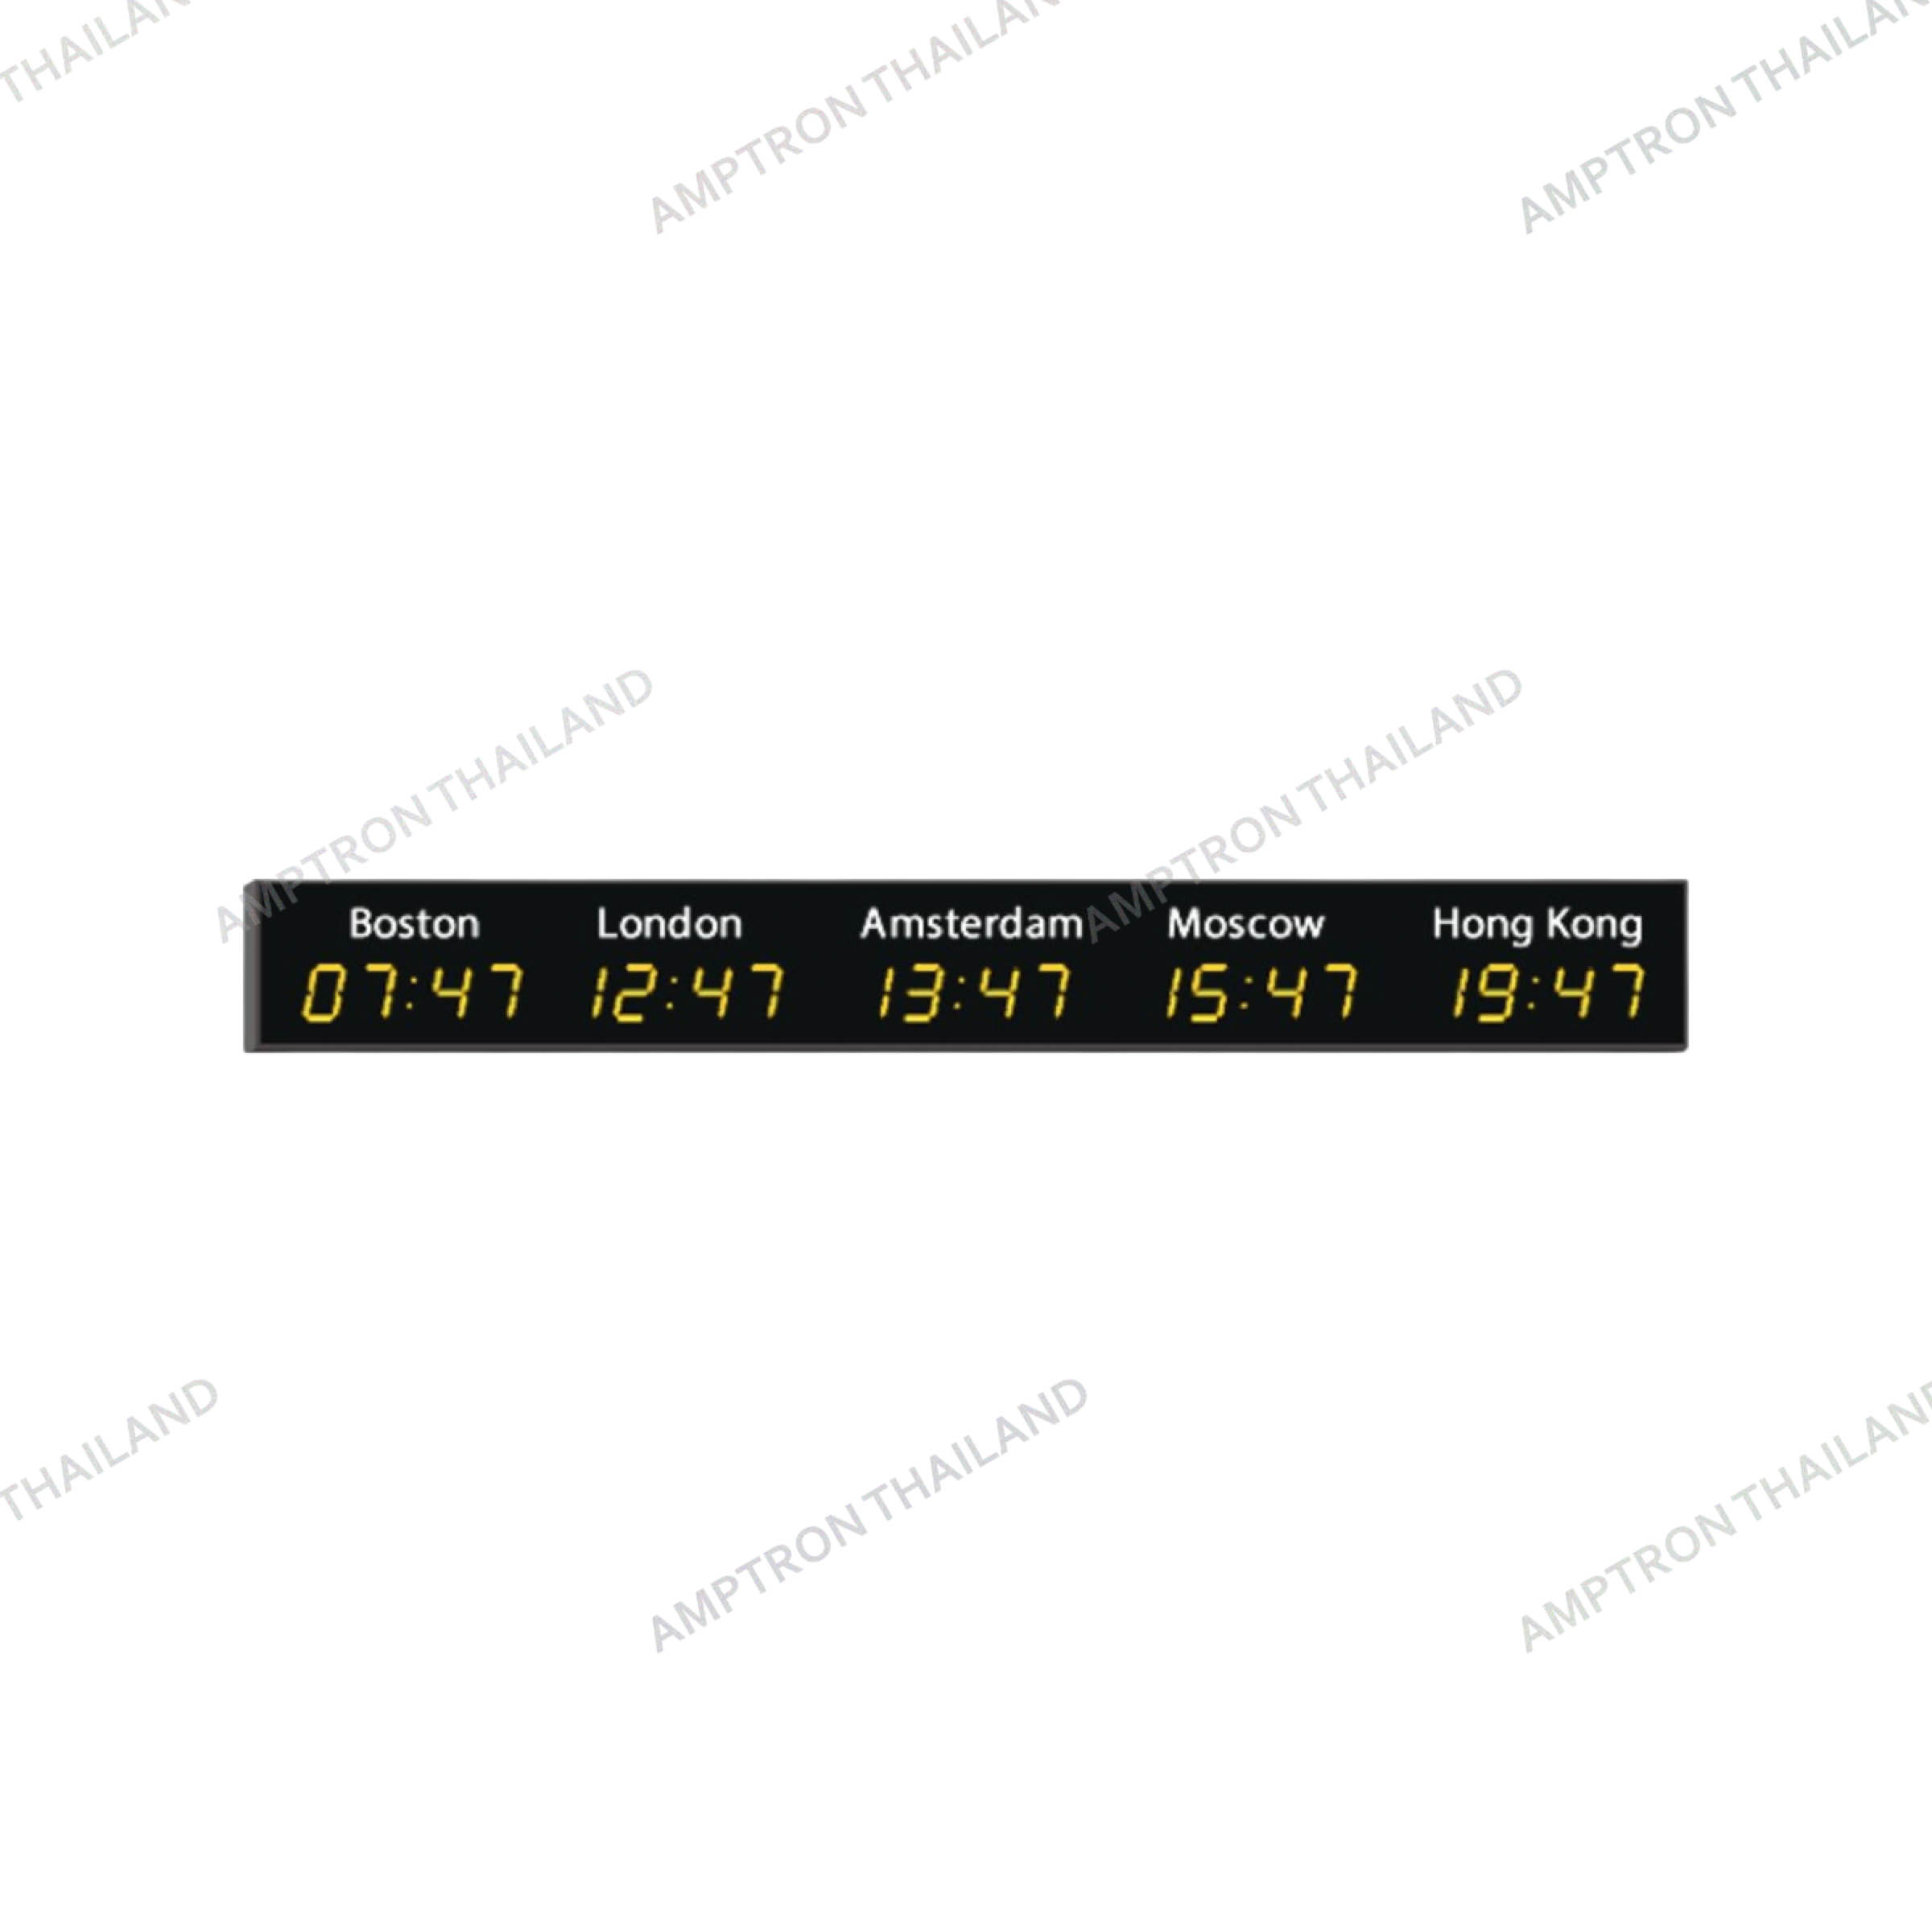 4740N.057 digital world time zone wall clocks with 57mm (2.3